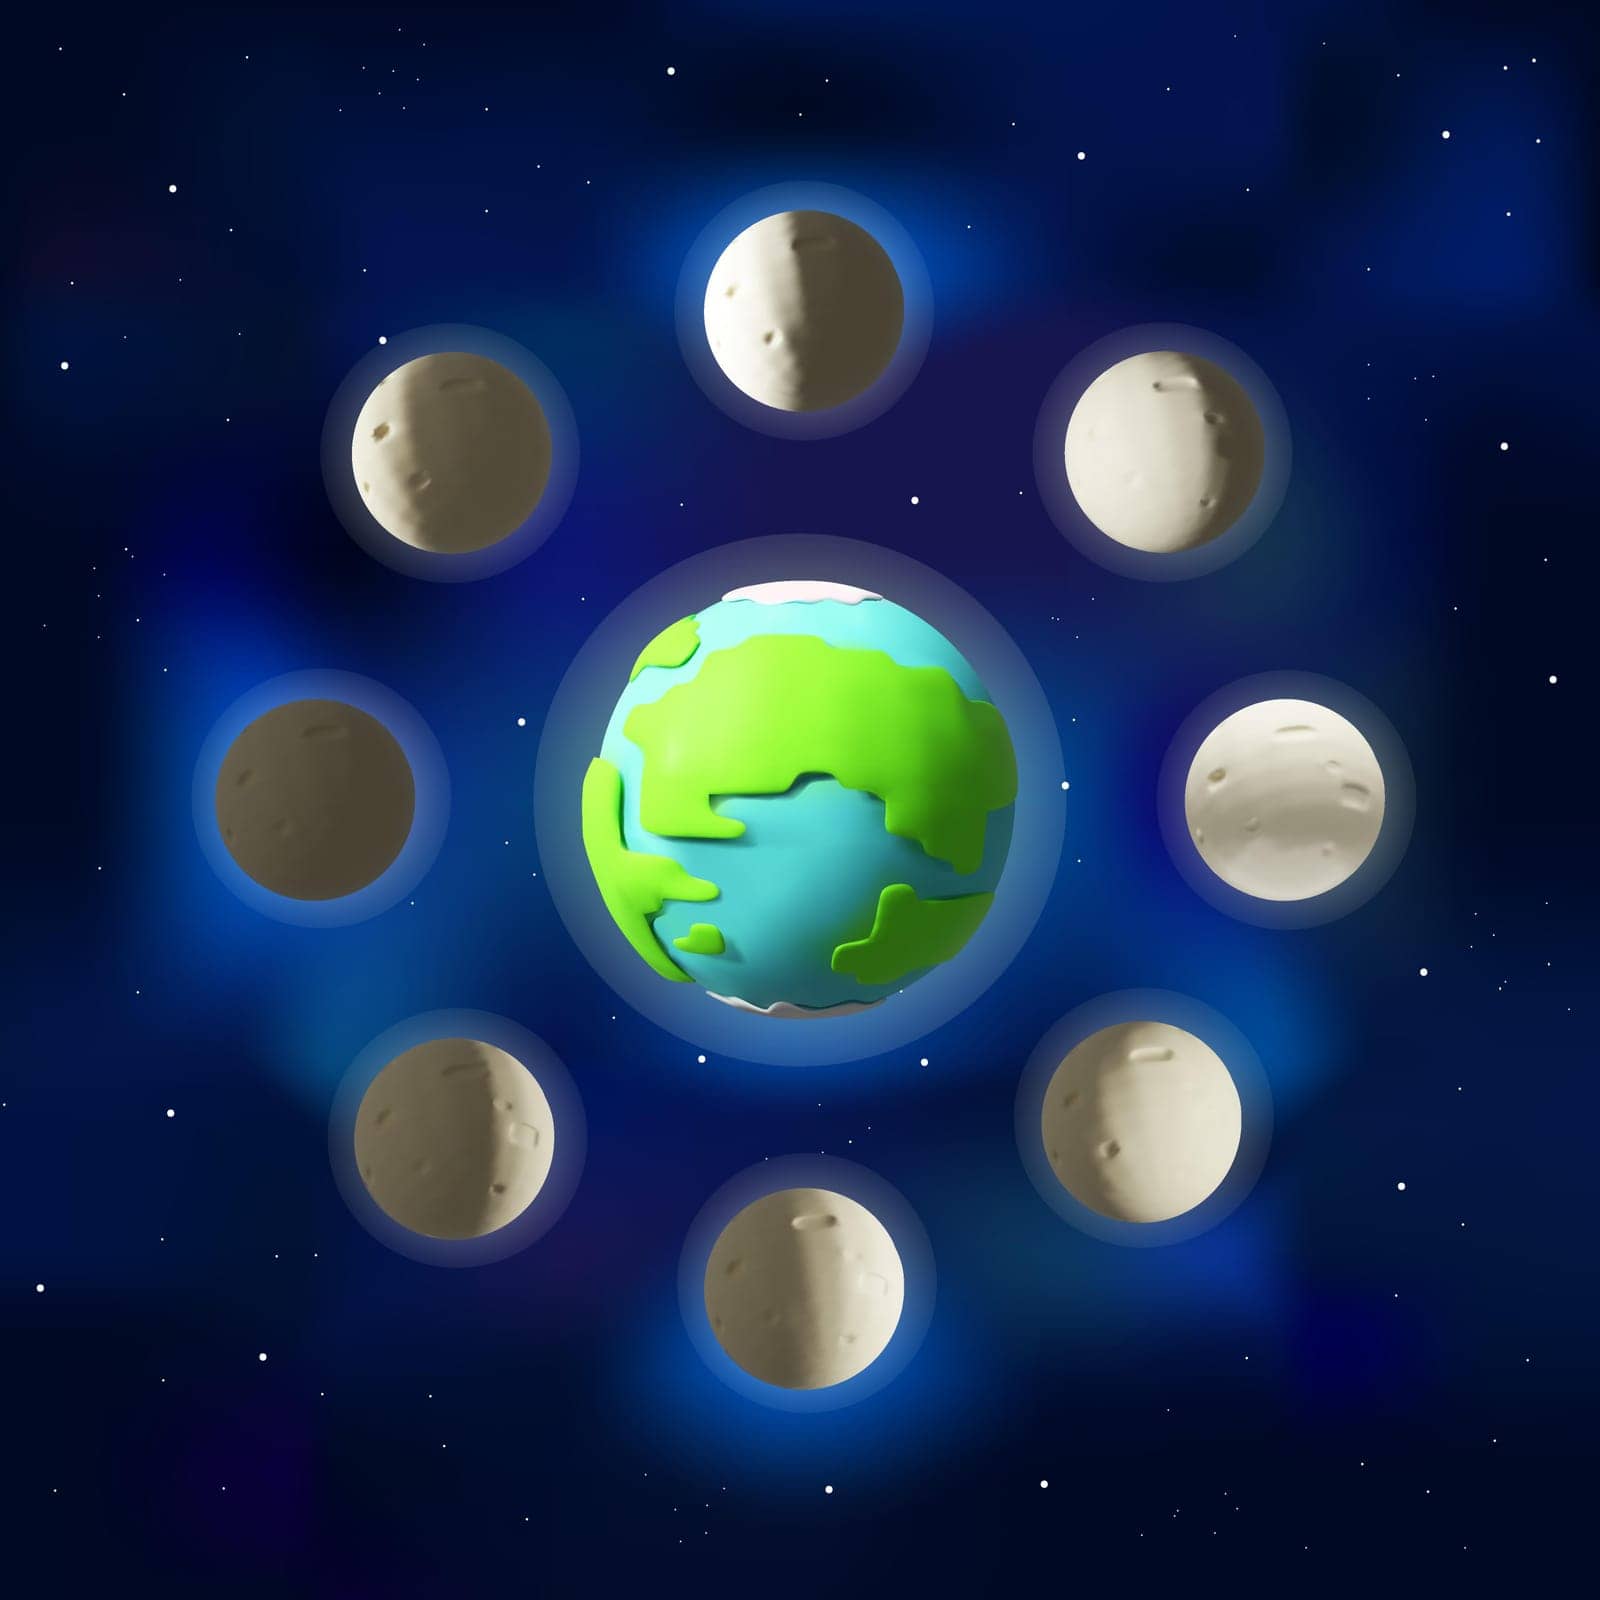 3D lunar phase in earth orbit by DaDariy